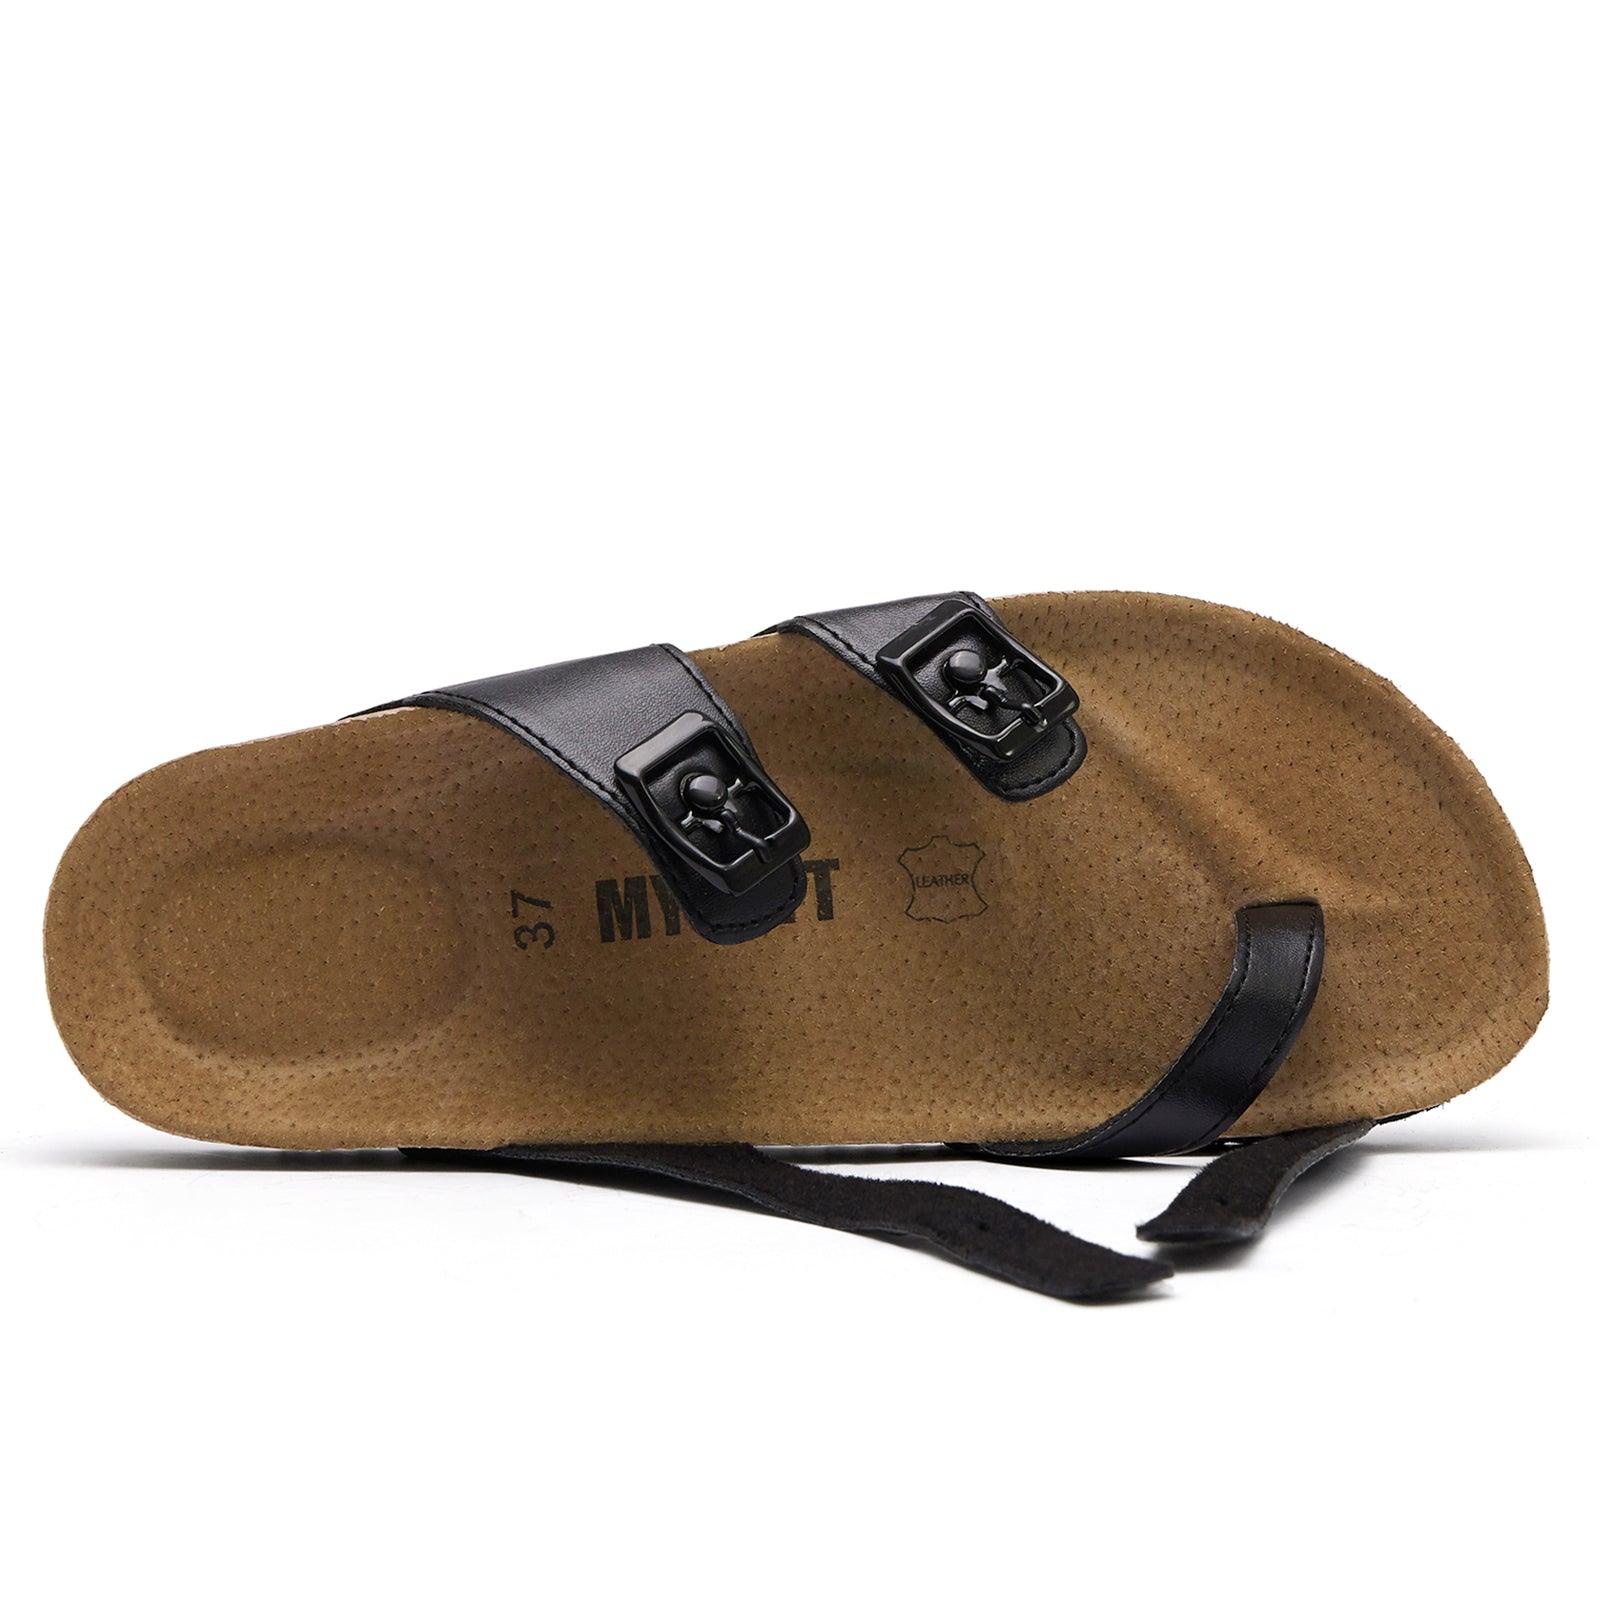 Double Buckle Flip Flop Sandals with Cork Footbed - MYSOFT